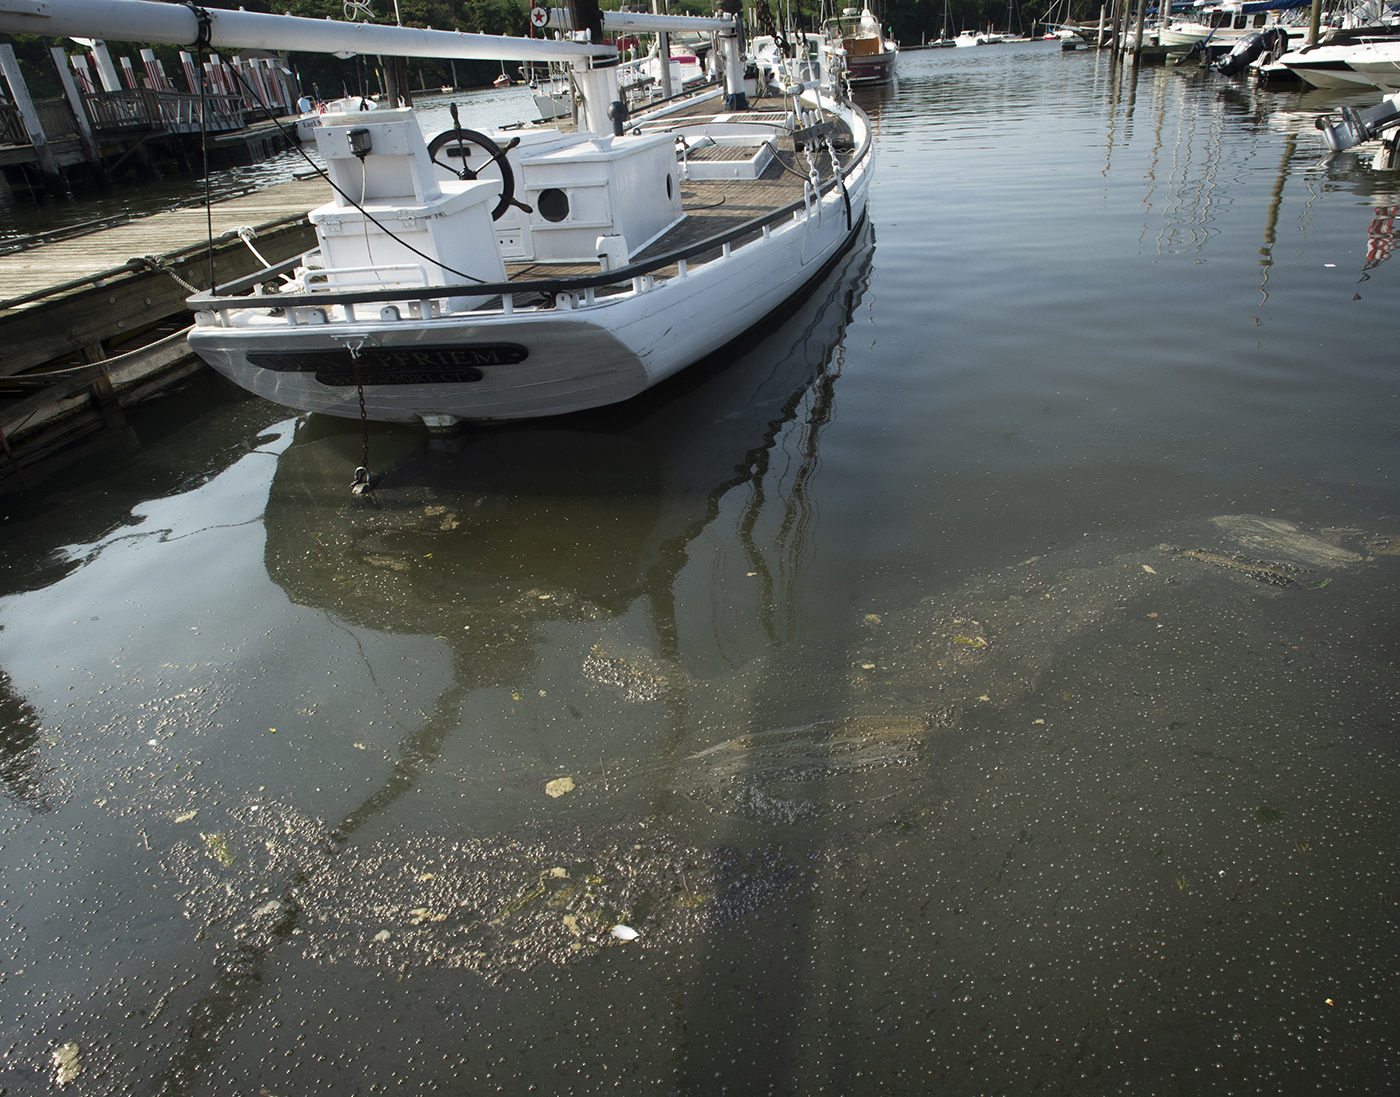 Dead Fish, Condoms, Brown Foam: Sewage Has Chokehold On Black Rock Harbor